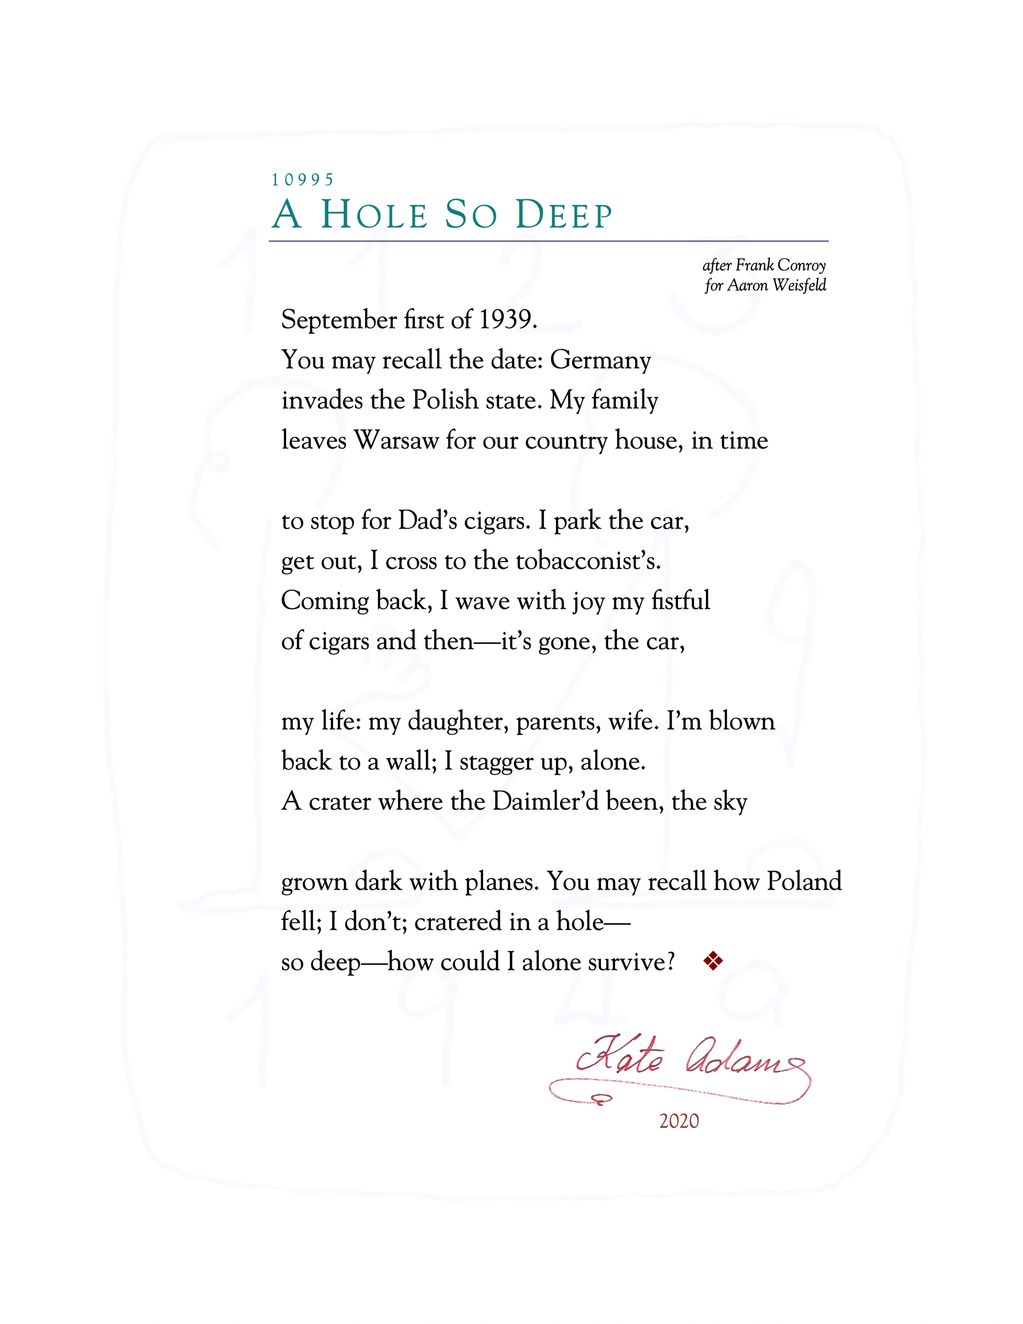 PDF of poem "A Hole So Deep"
Daimler, Warsaw, Germany, Poland, Conroy